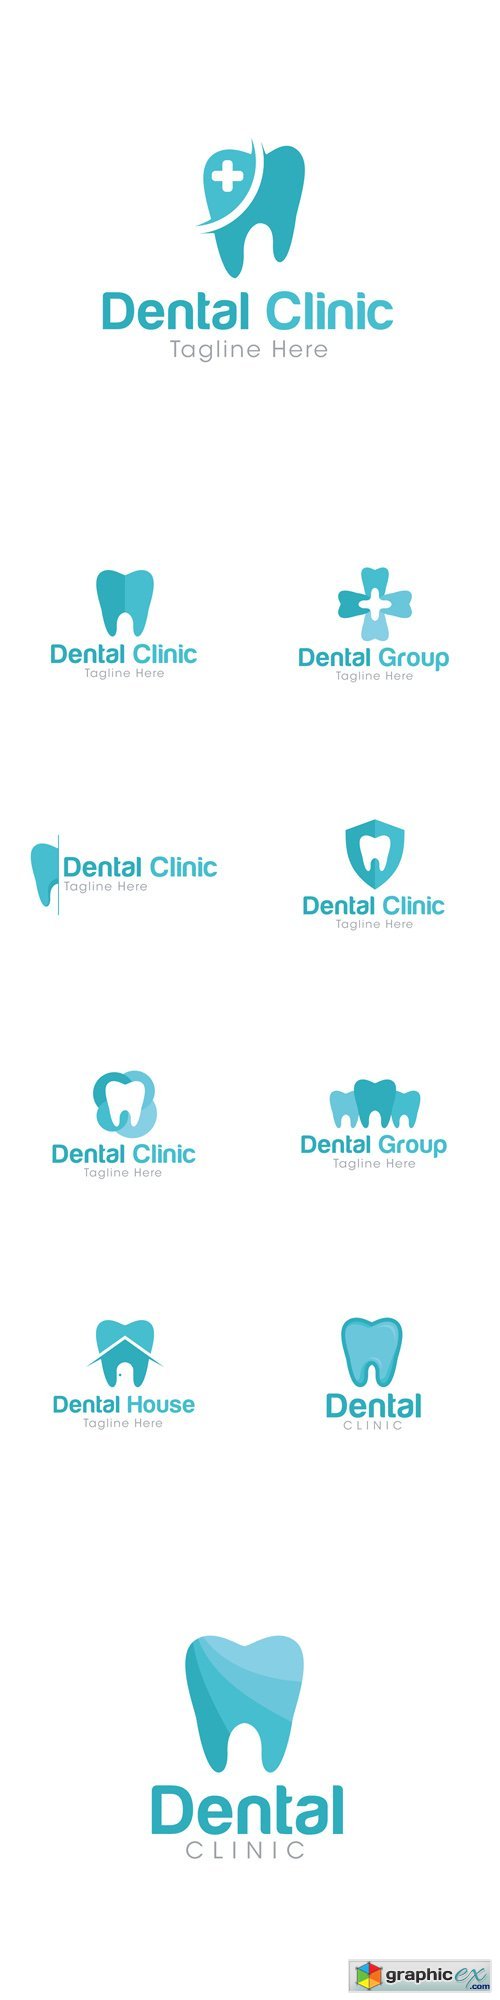 Dental Clinic Logo Creative Design